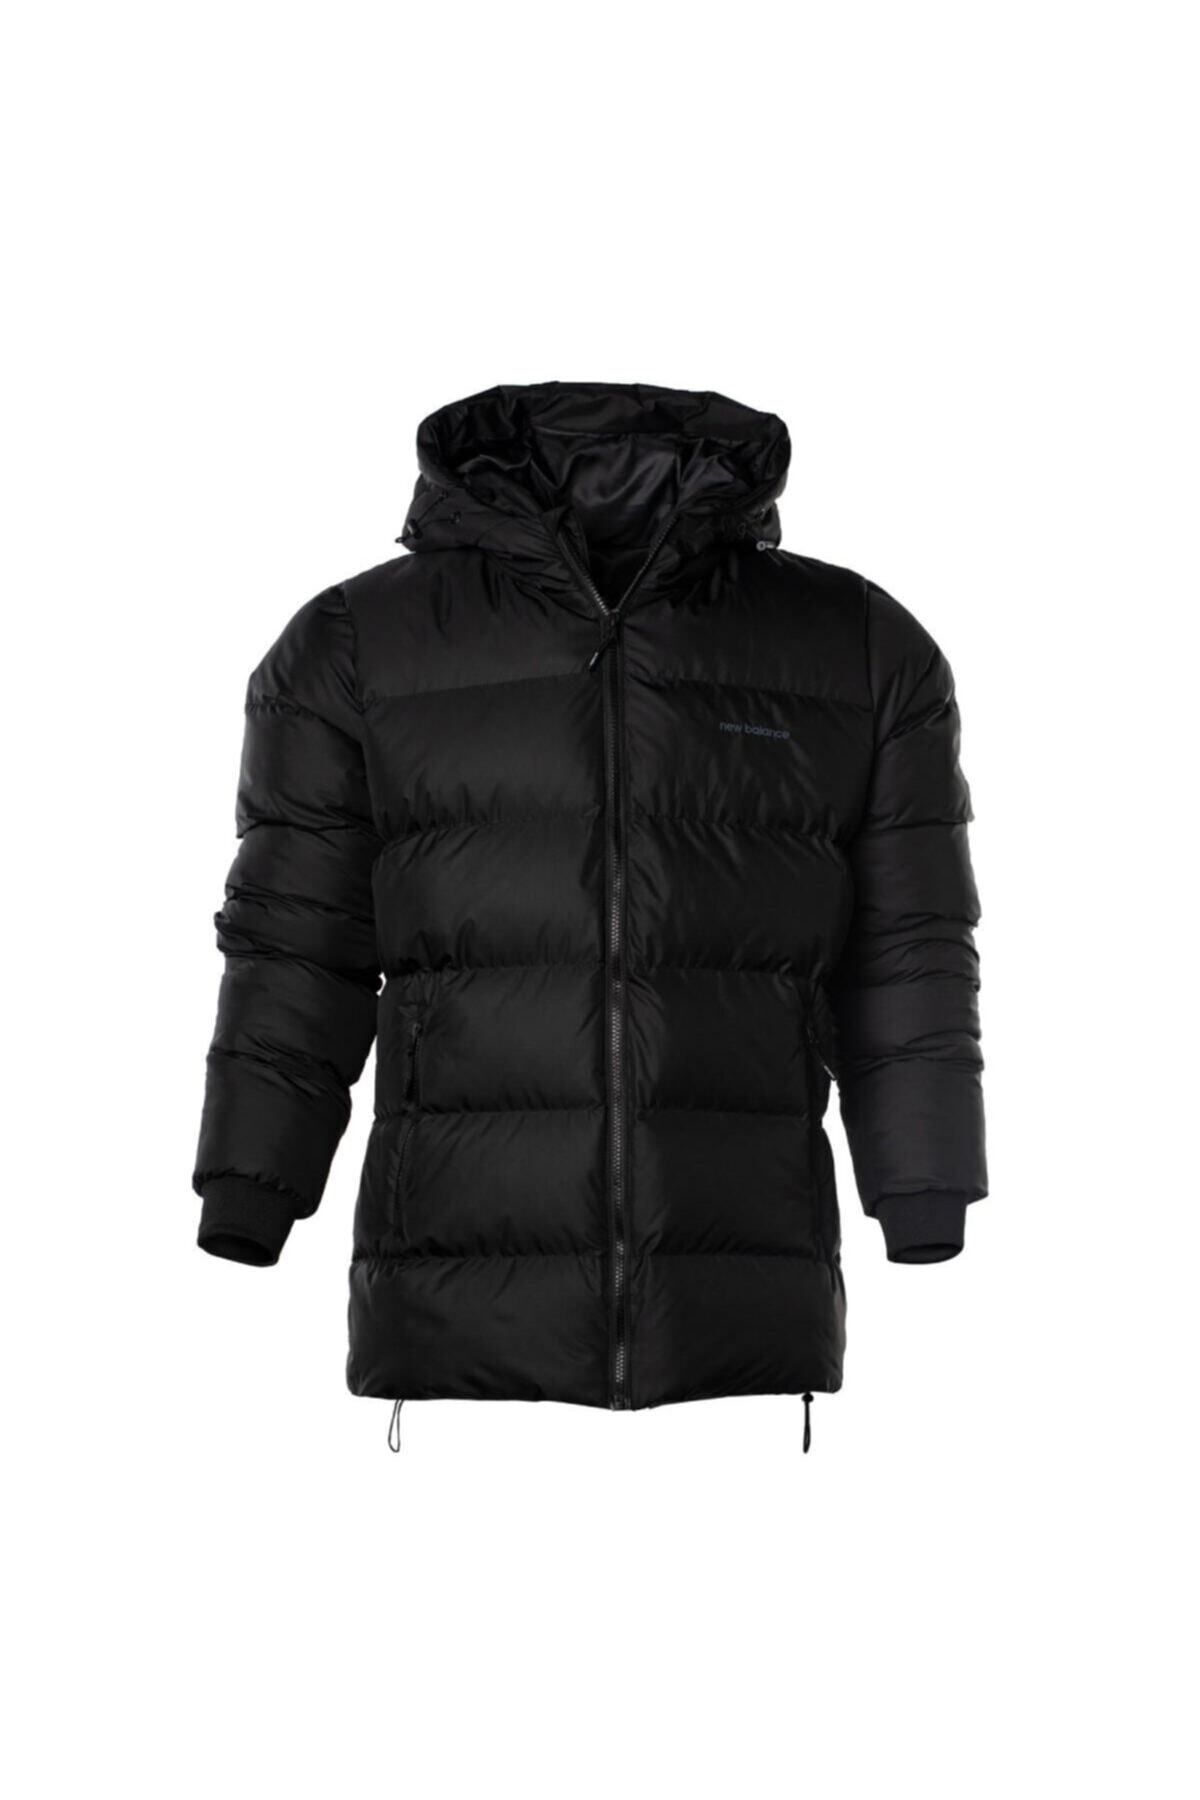 New Balance Nb Puffer Jacket Erkek Siyah Ceket Mpj3122-bk